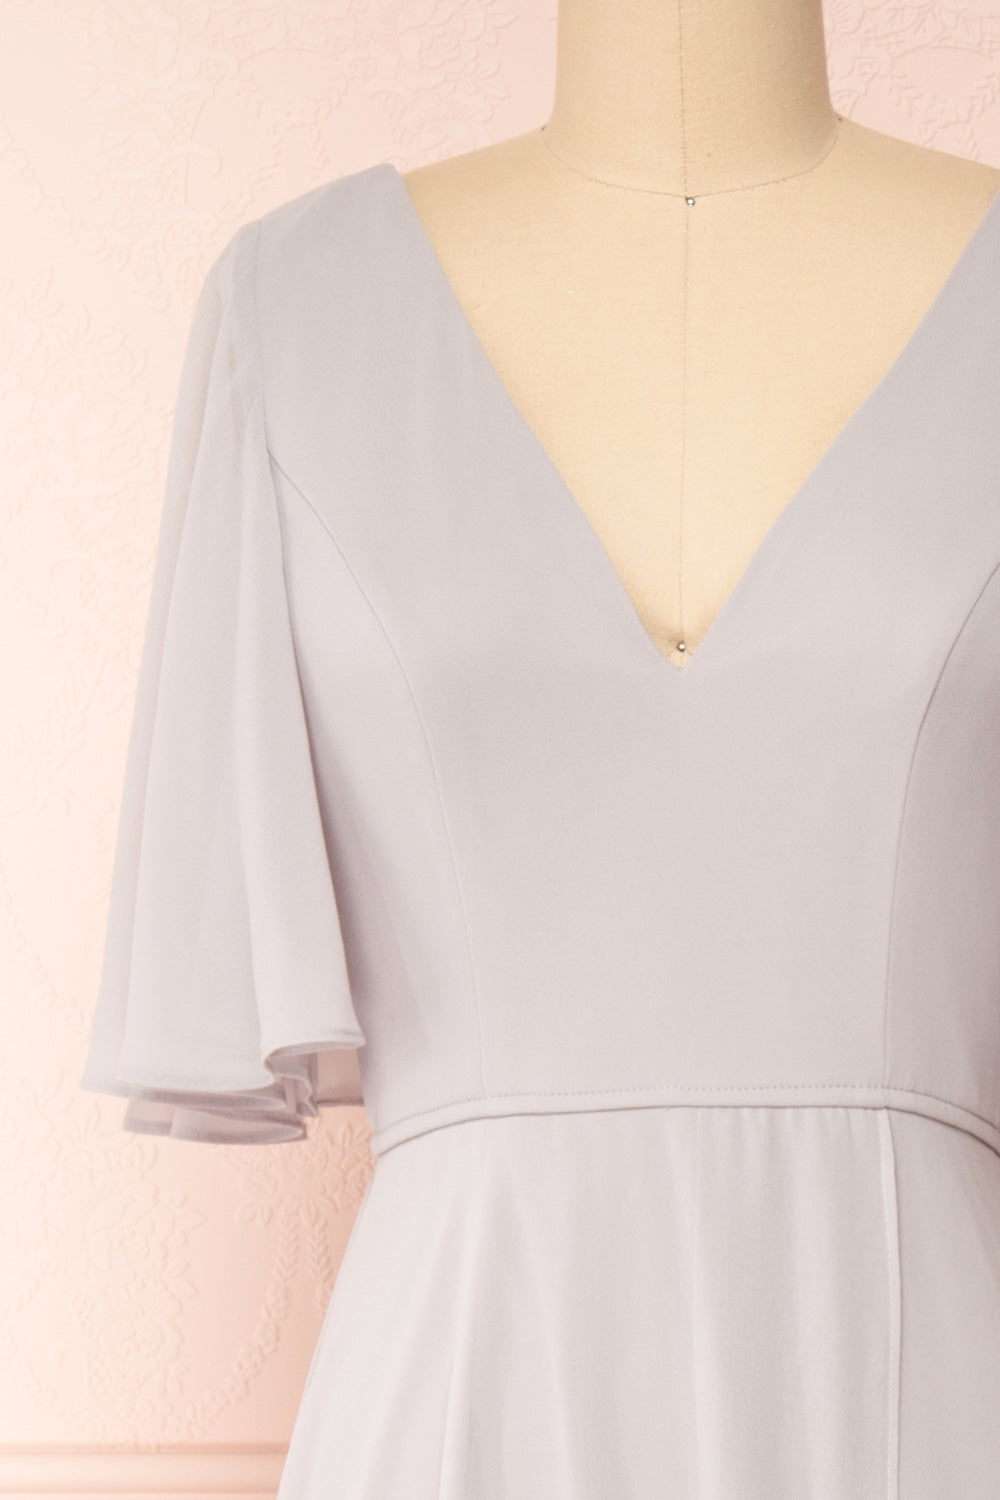 Adelphia Grey Short Sleeve Chiffon Maxi Dress | Boutique 1861  front close-up